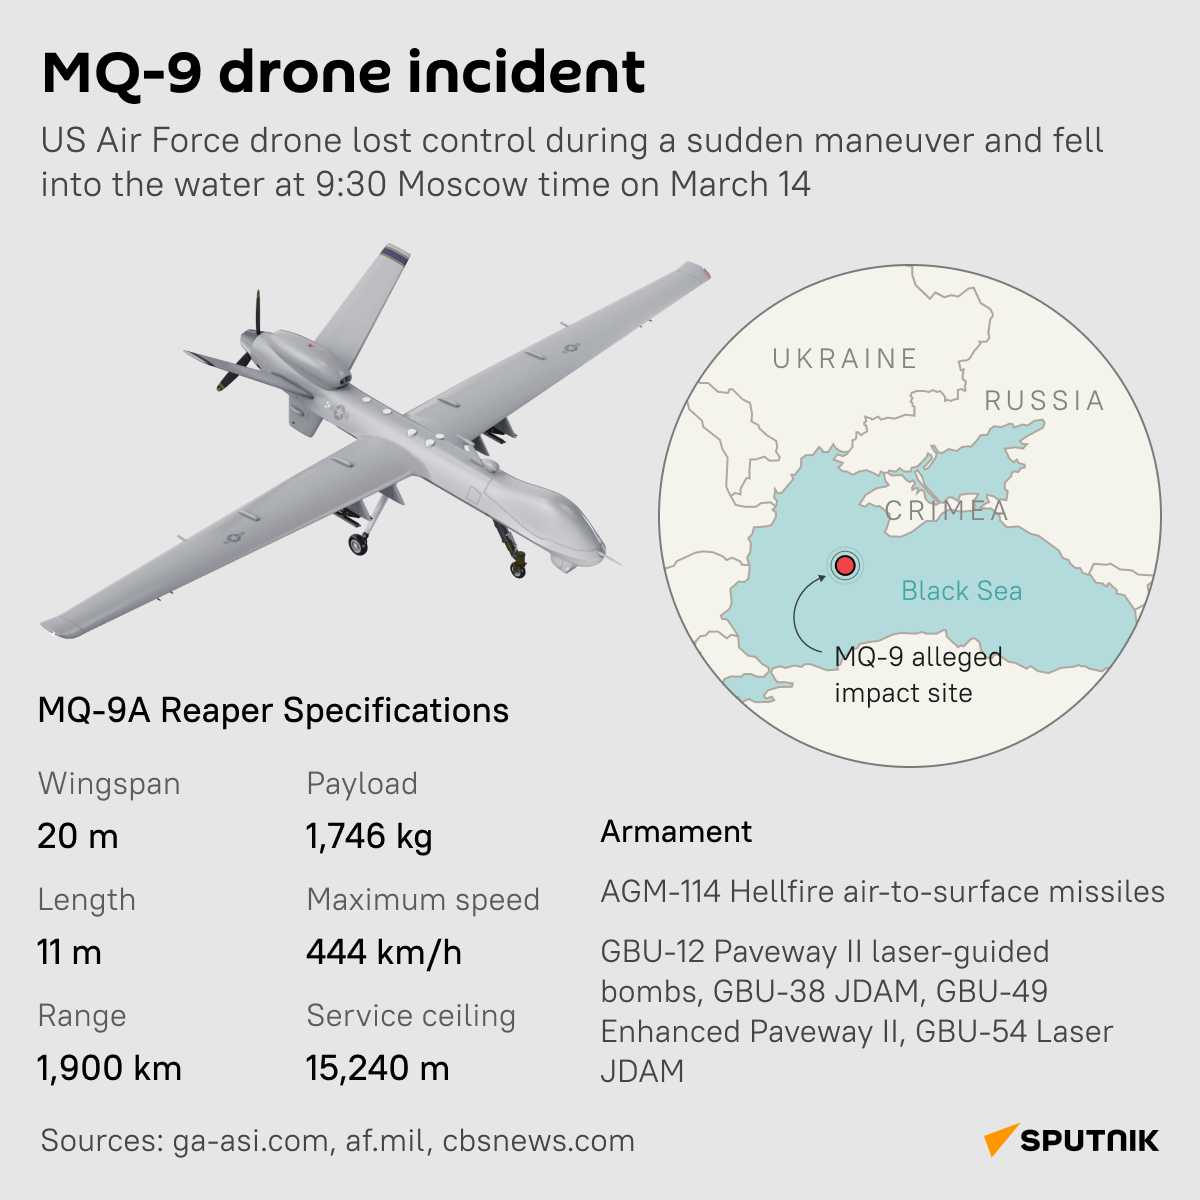 MQ-9 Drone Incident - Sputnik International